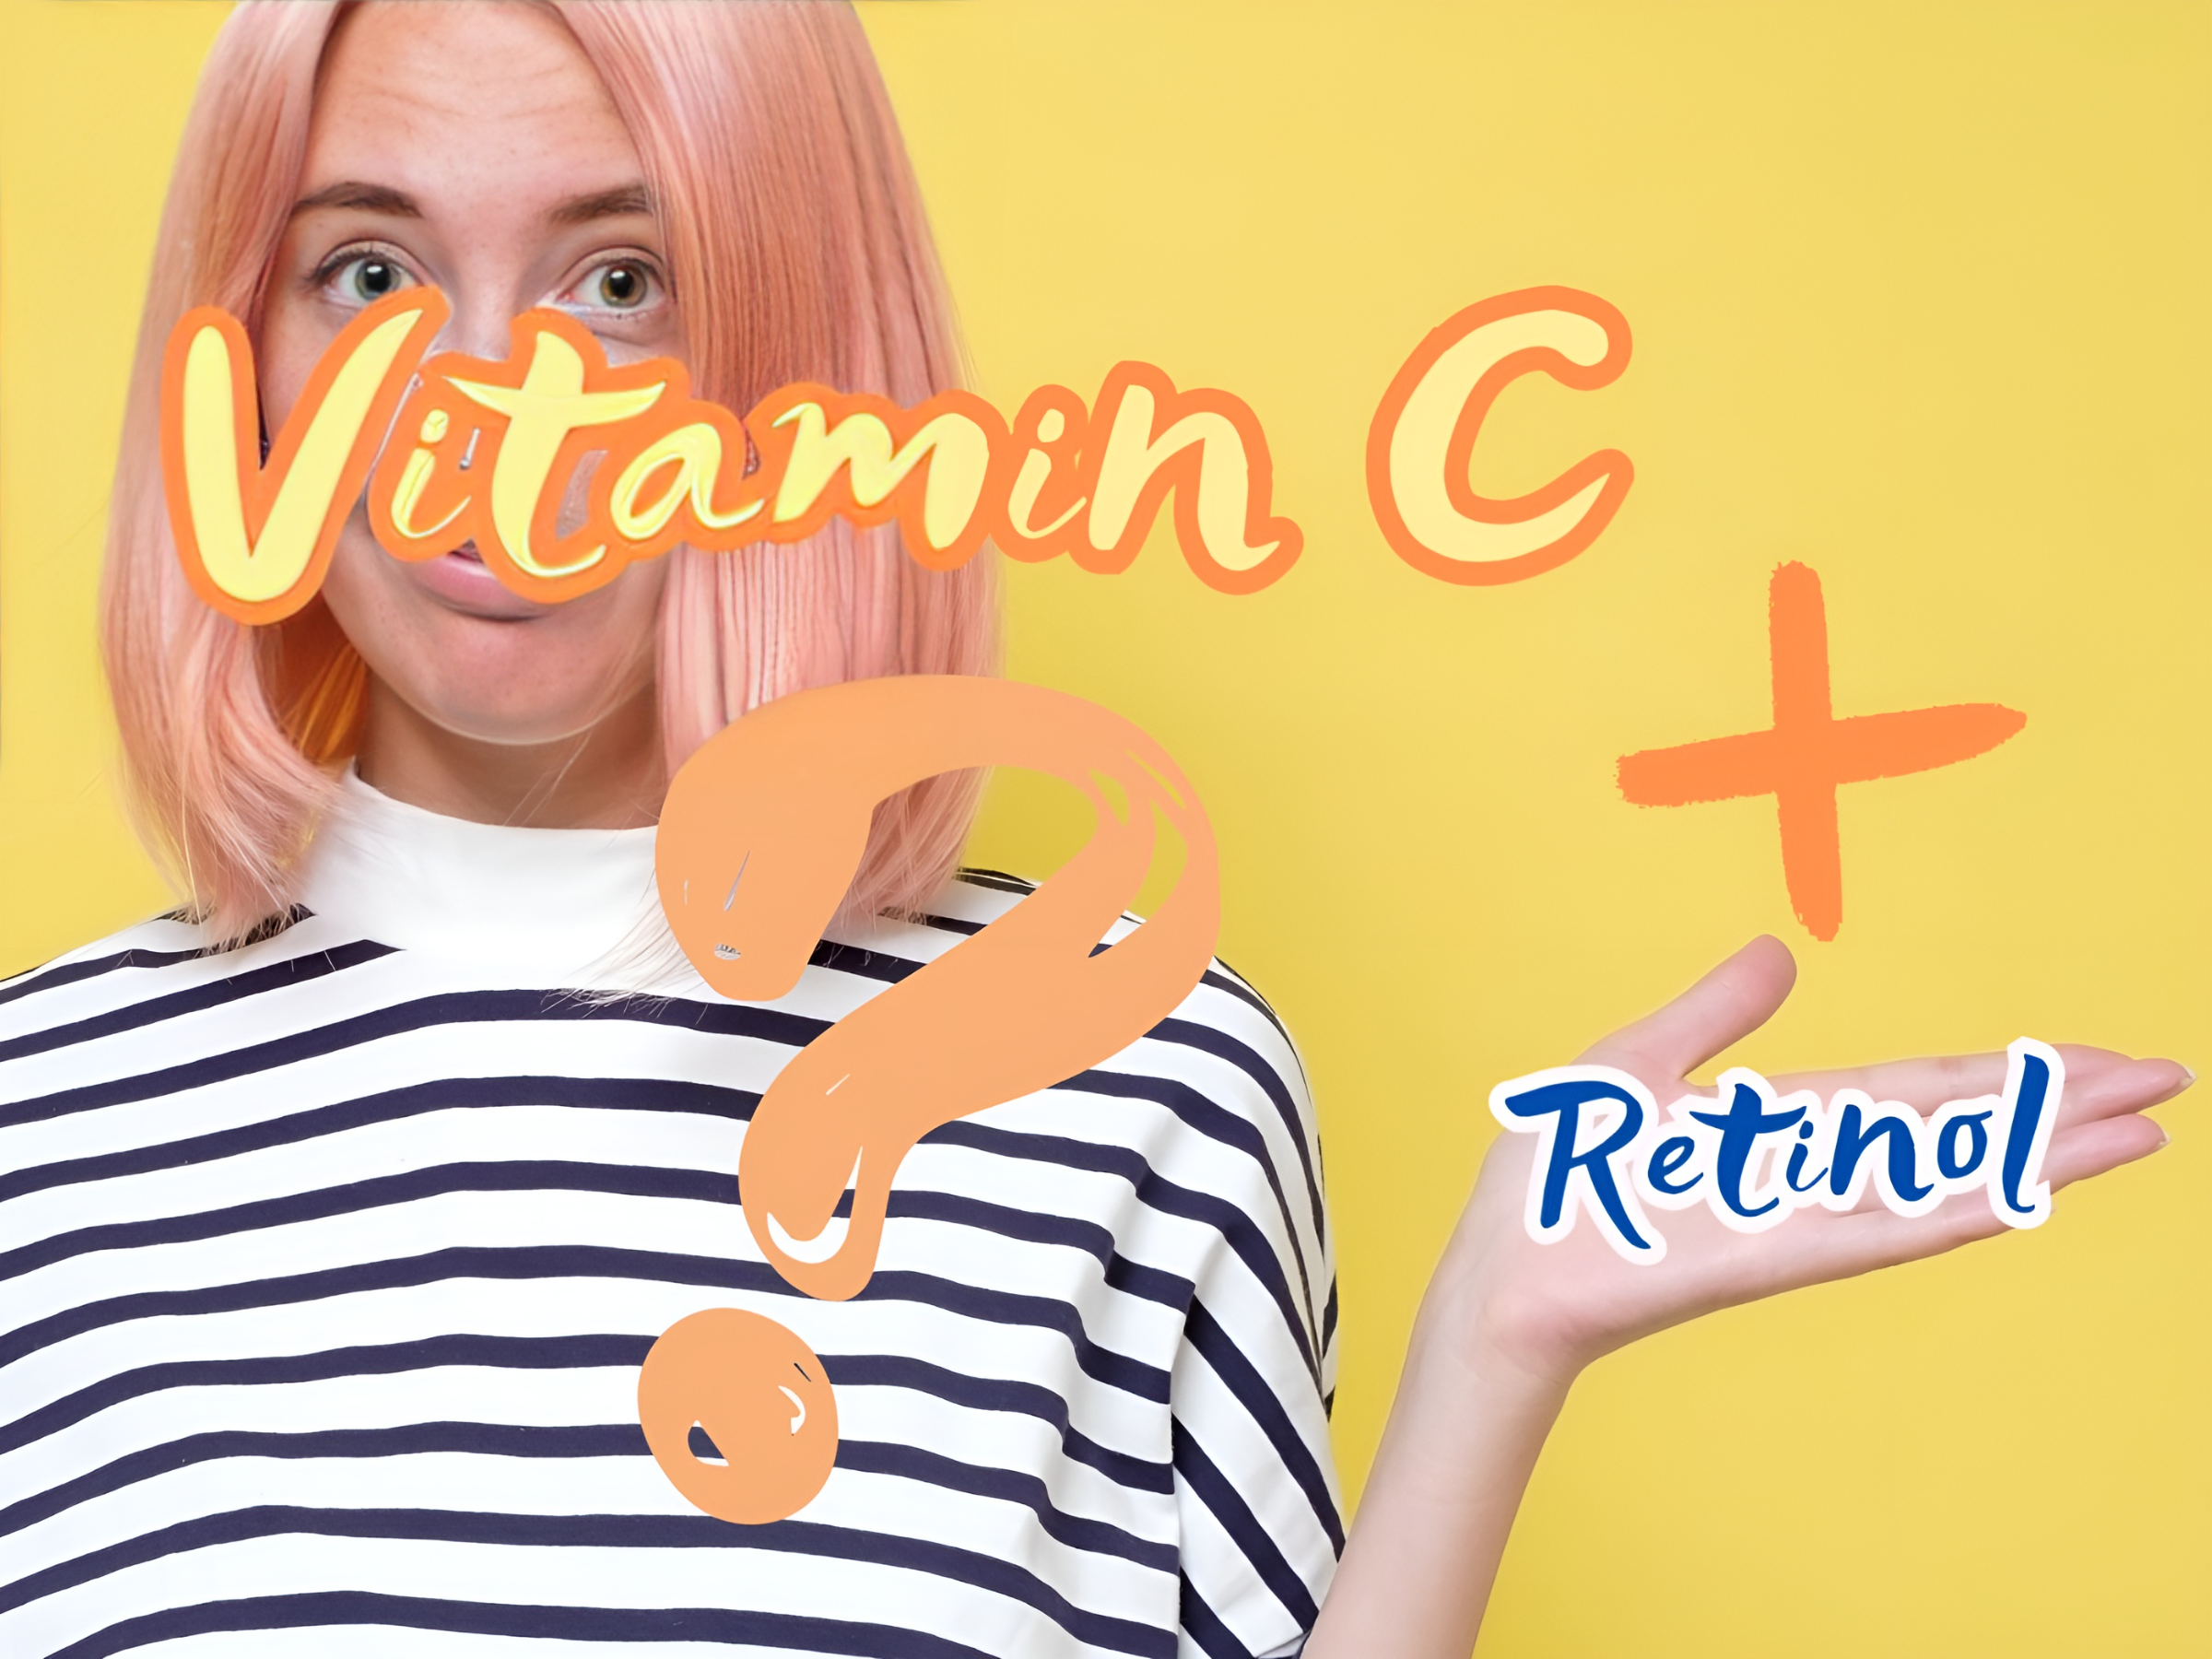 Vitamin C + Retinol?